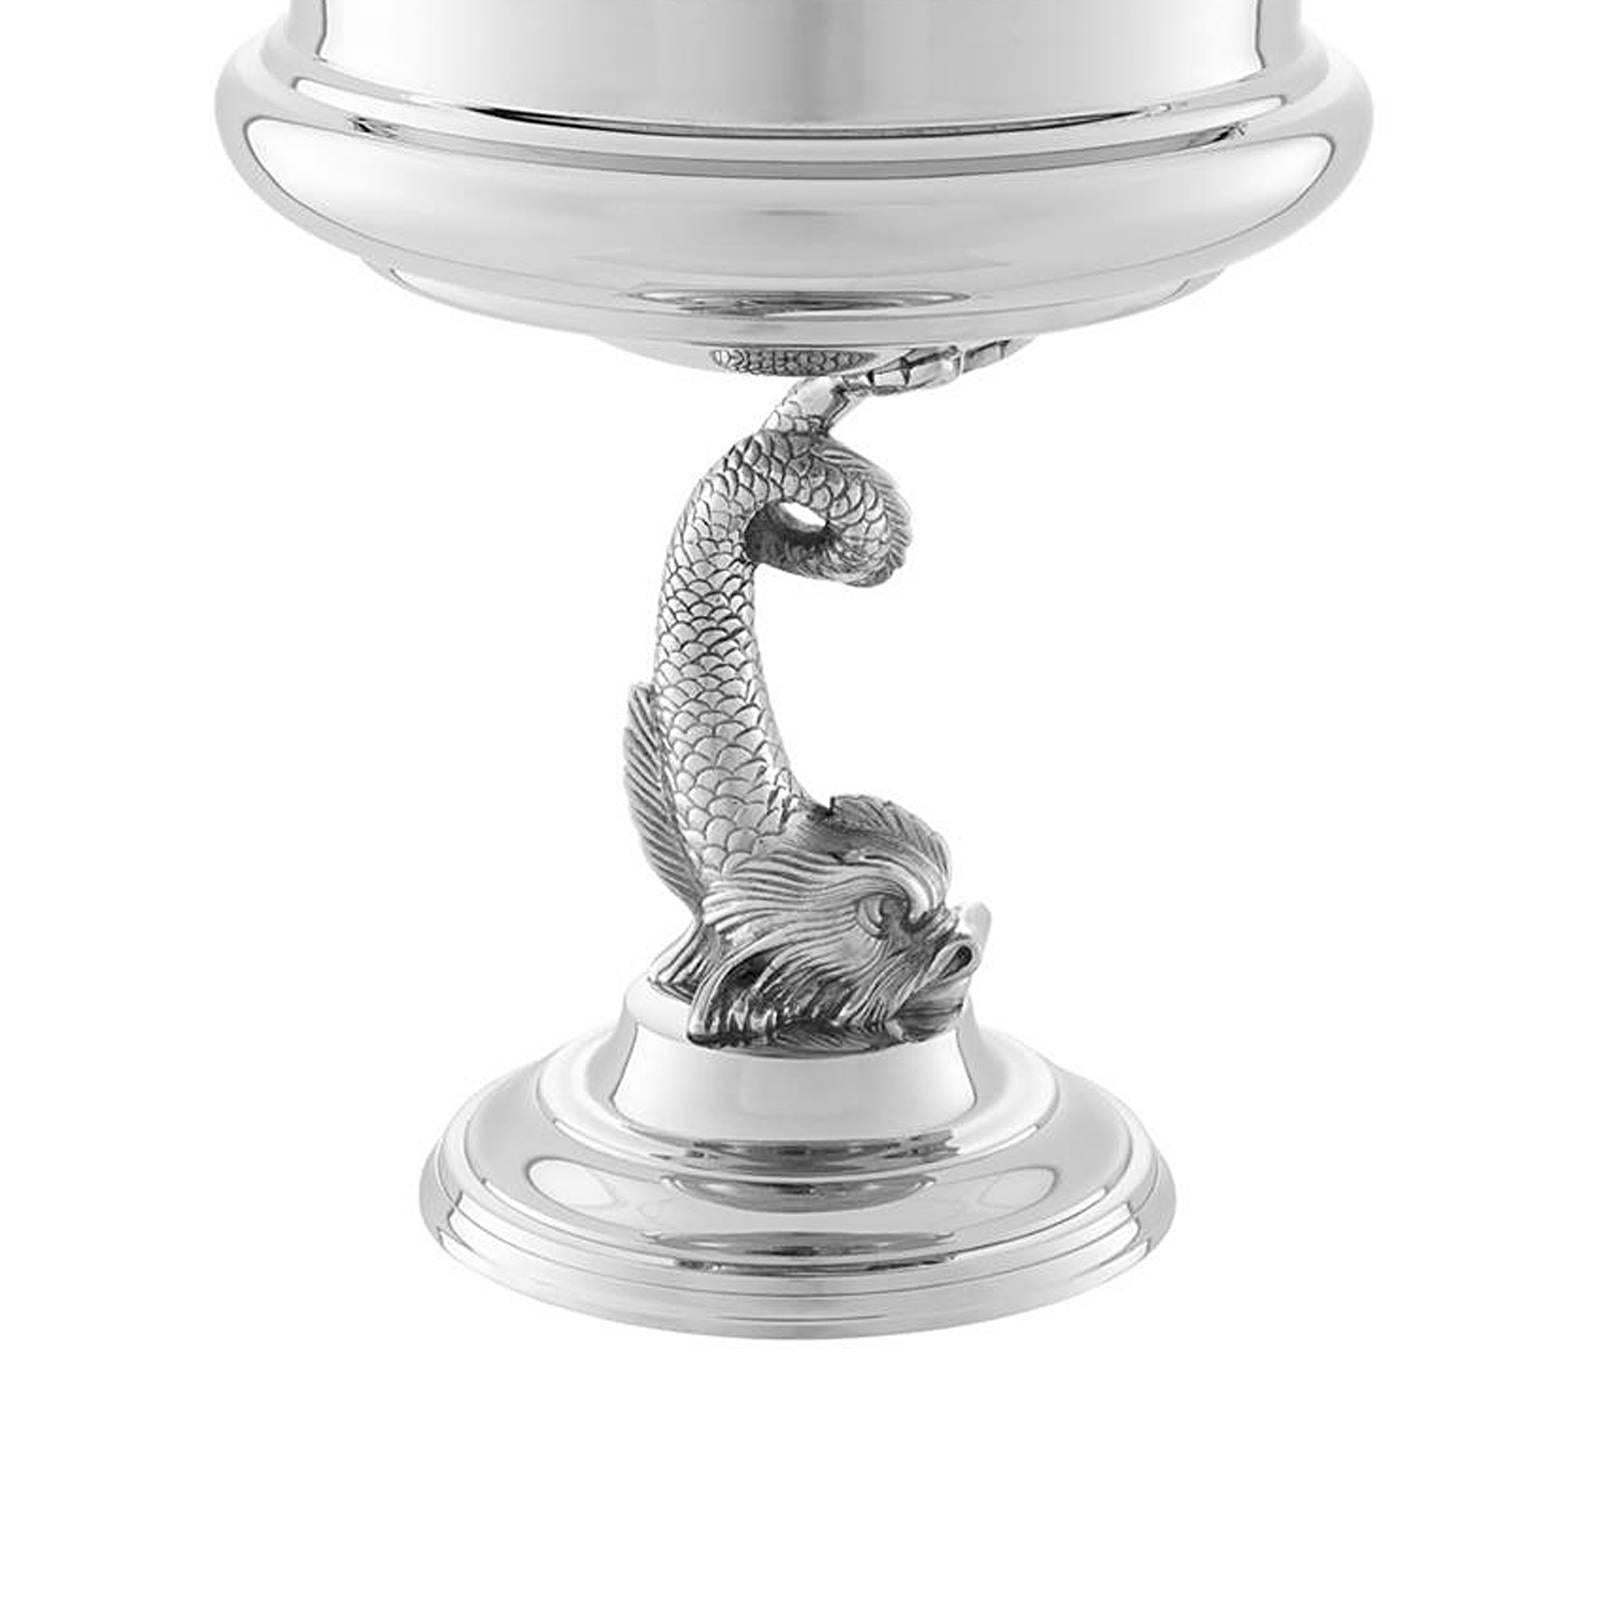 Polished Dragon Bowl or Caviar Cup in Nickel Finish